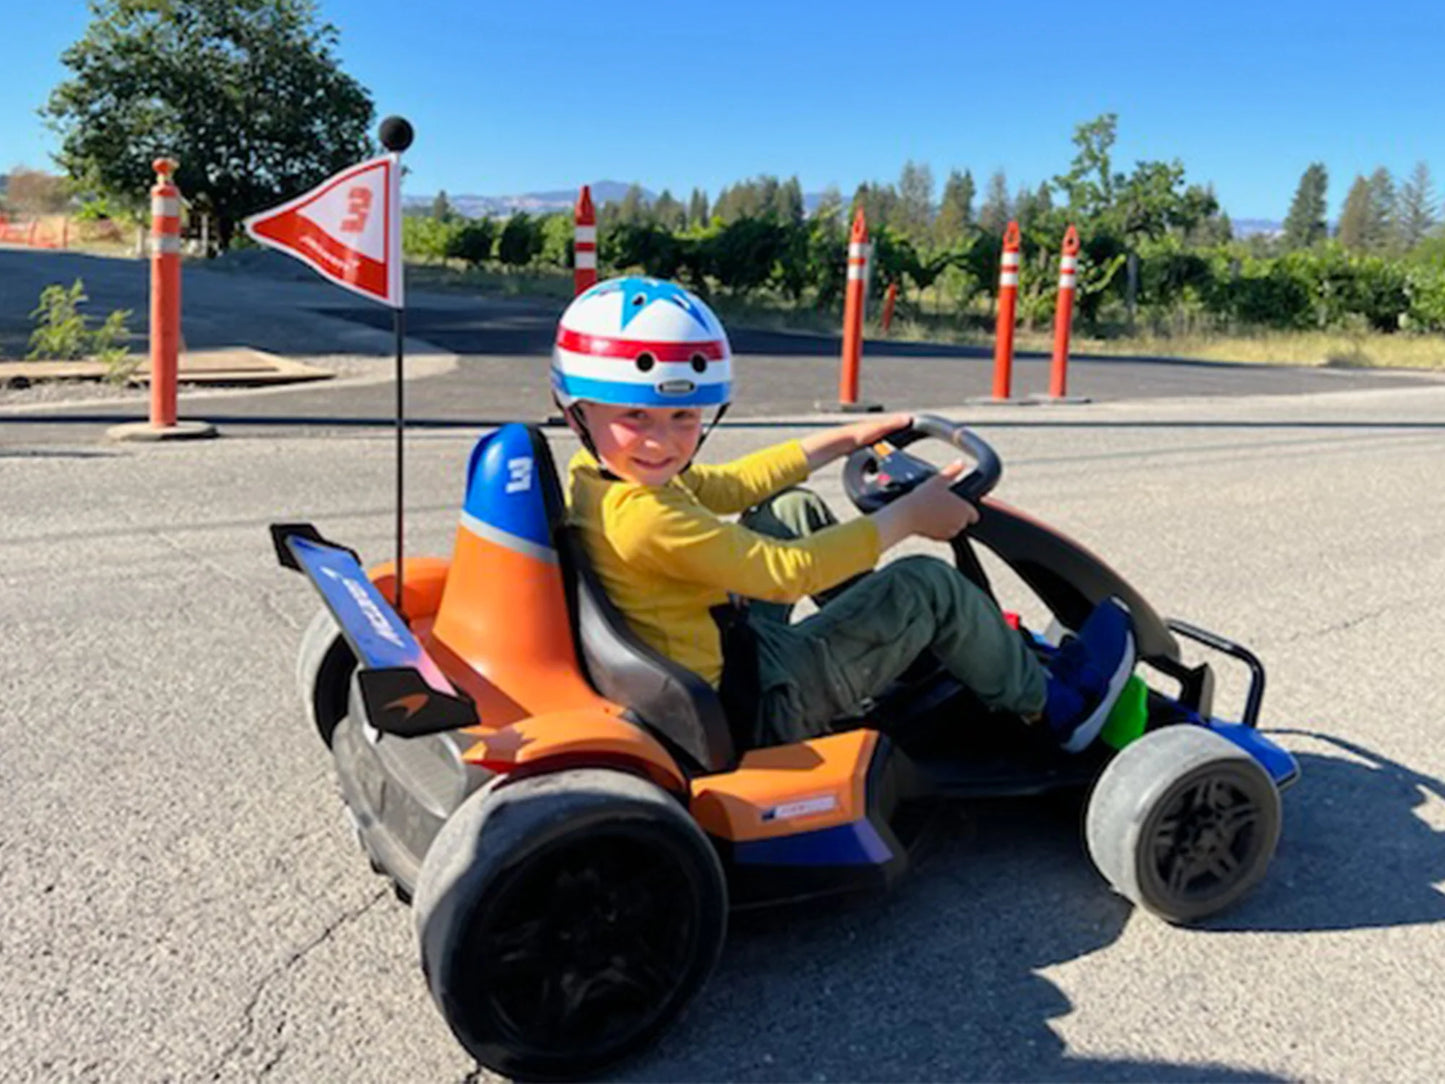 McLaren Formula 1 Go Kart for Kids